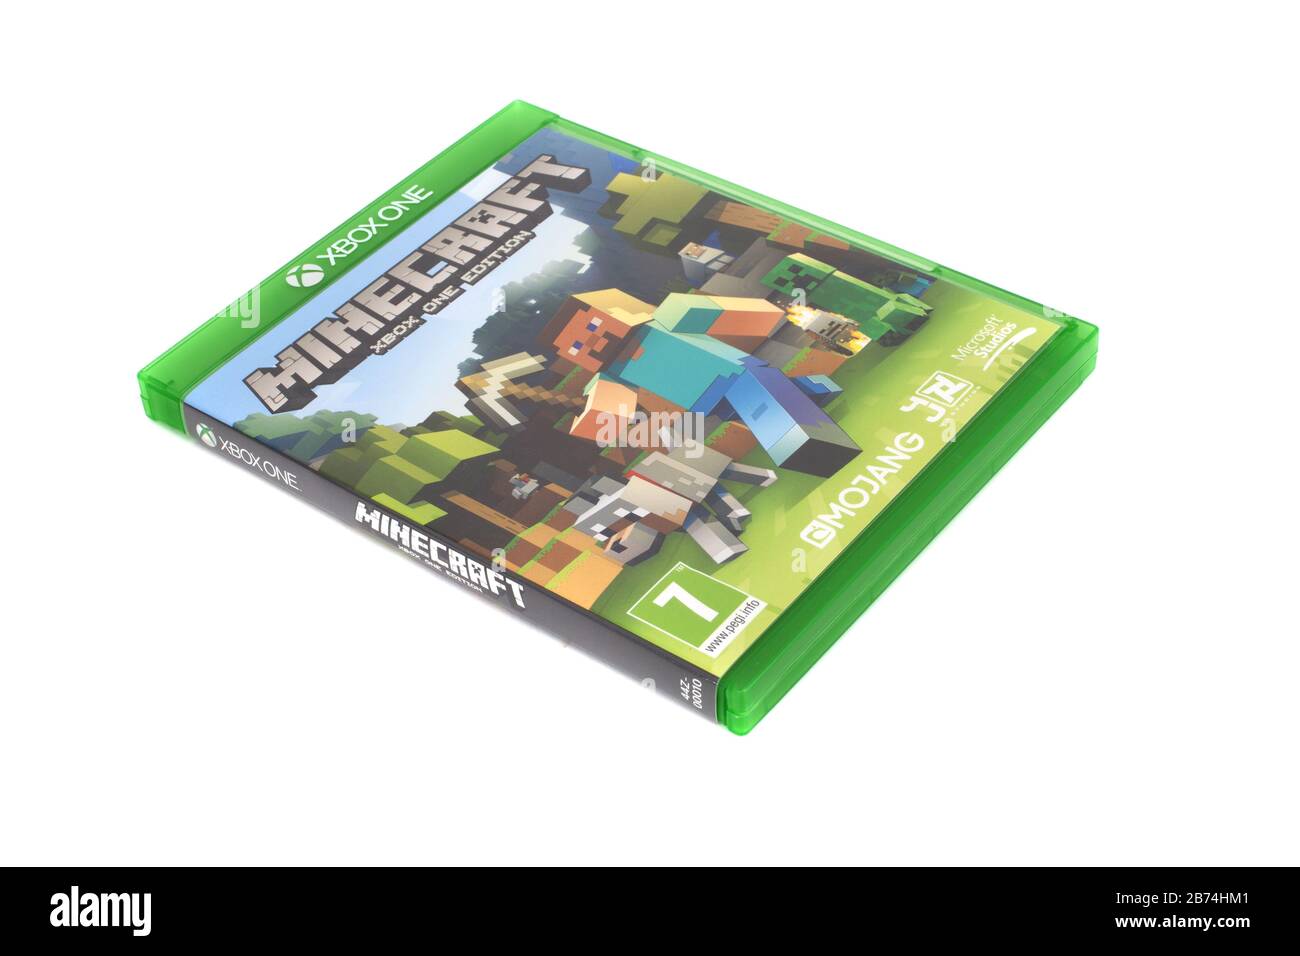 Minecraft (Microsoft Xbox 360, 2013) Spanish Espanol Edition, Ships Free